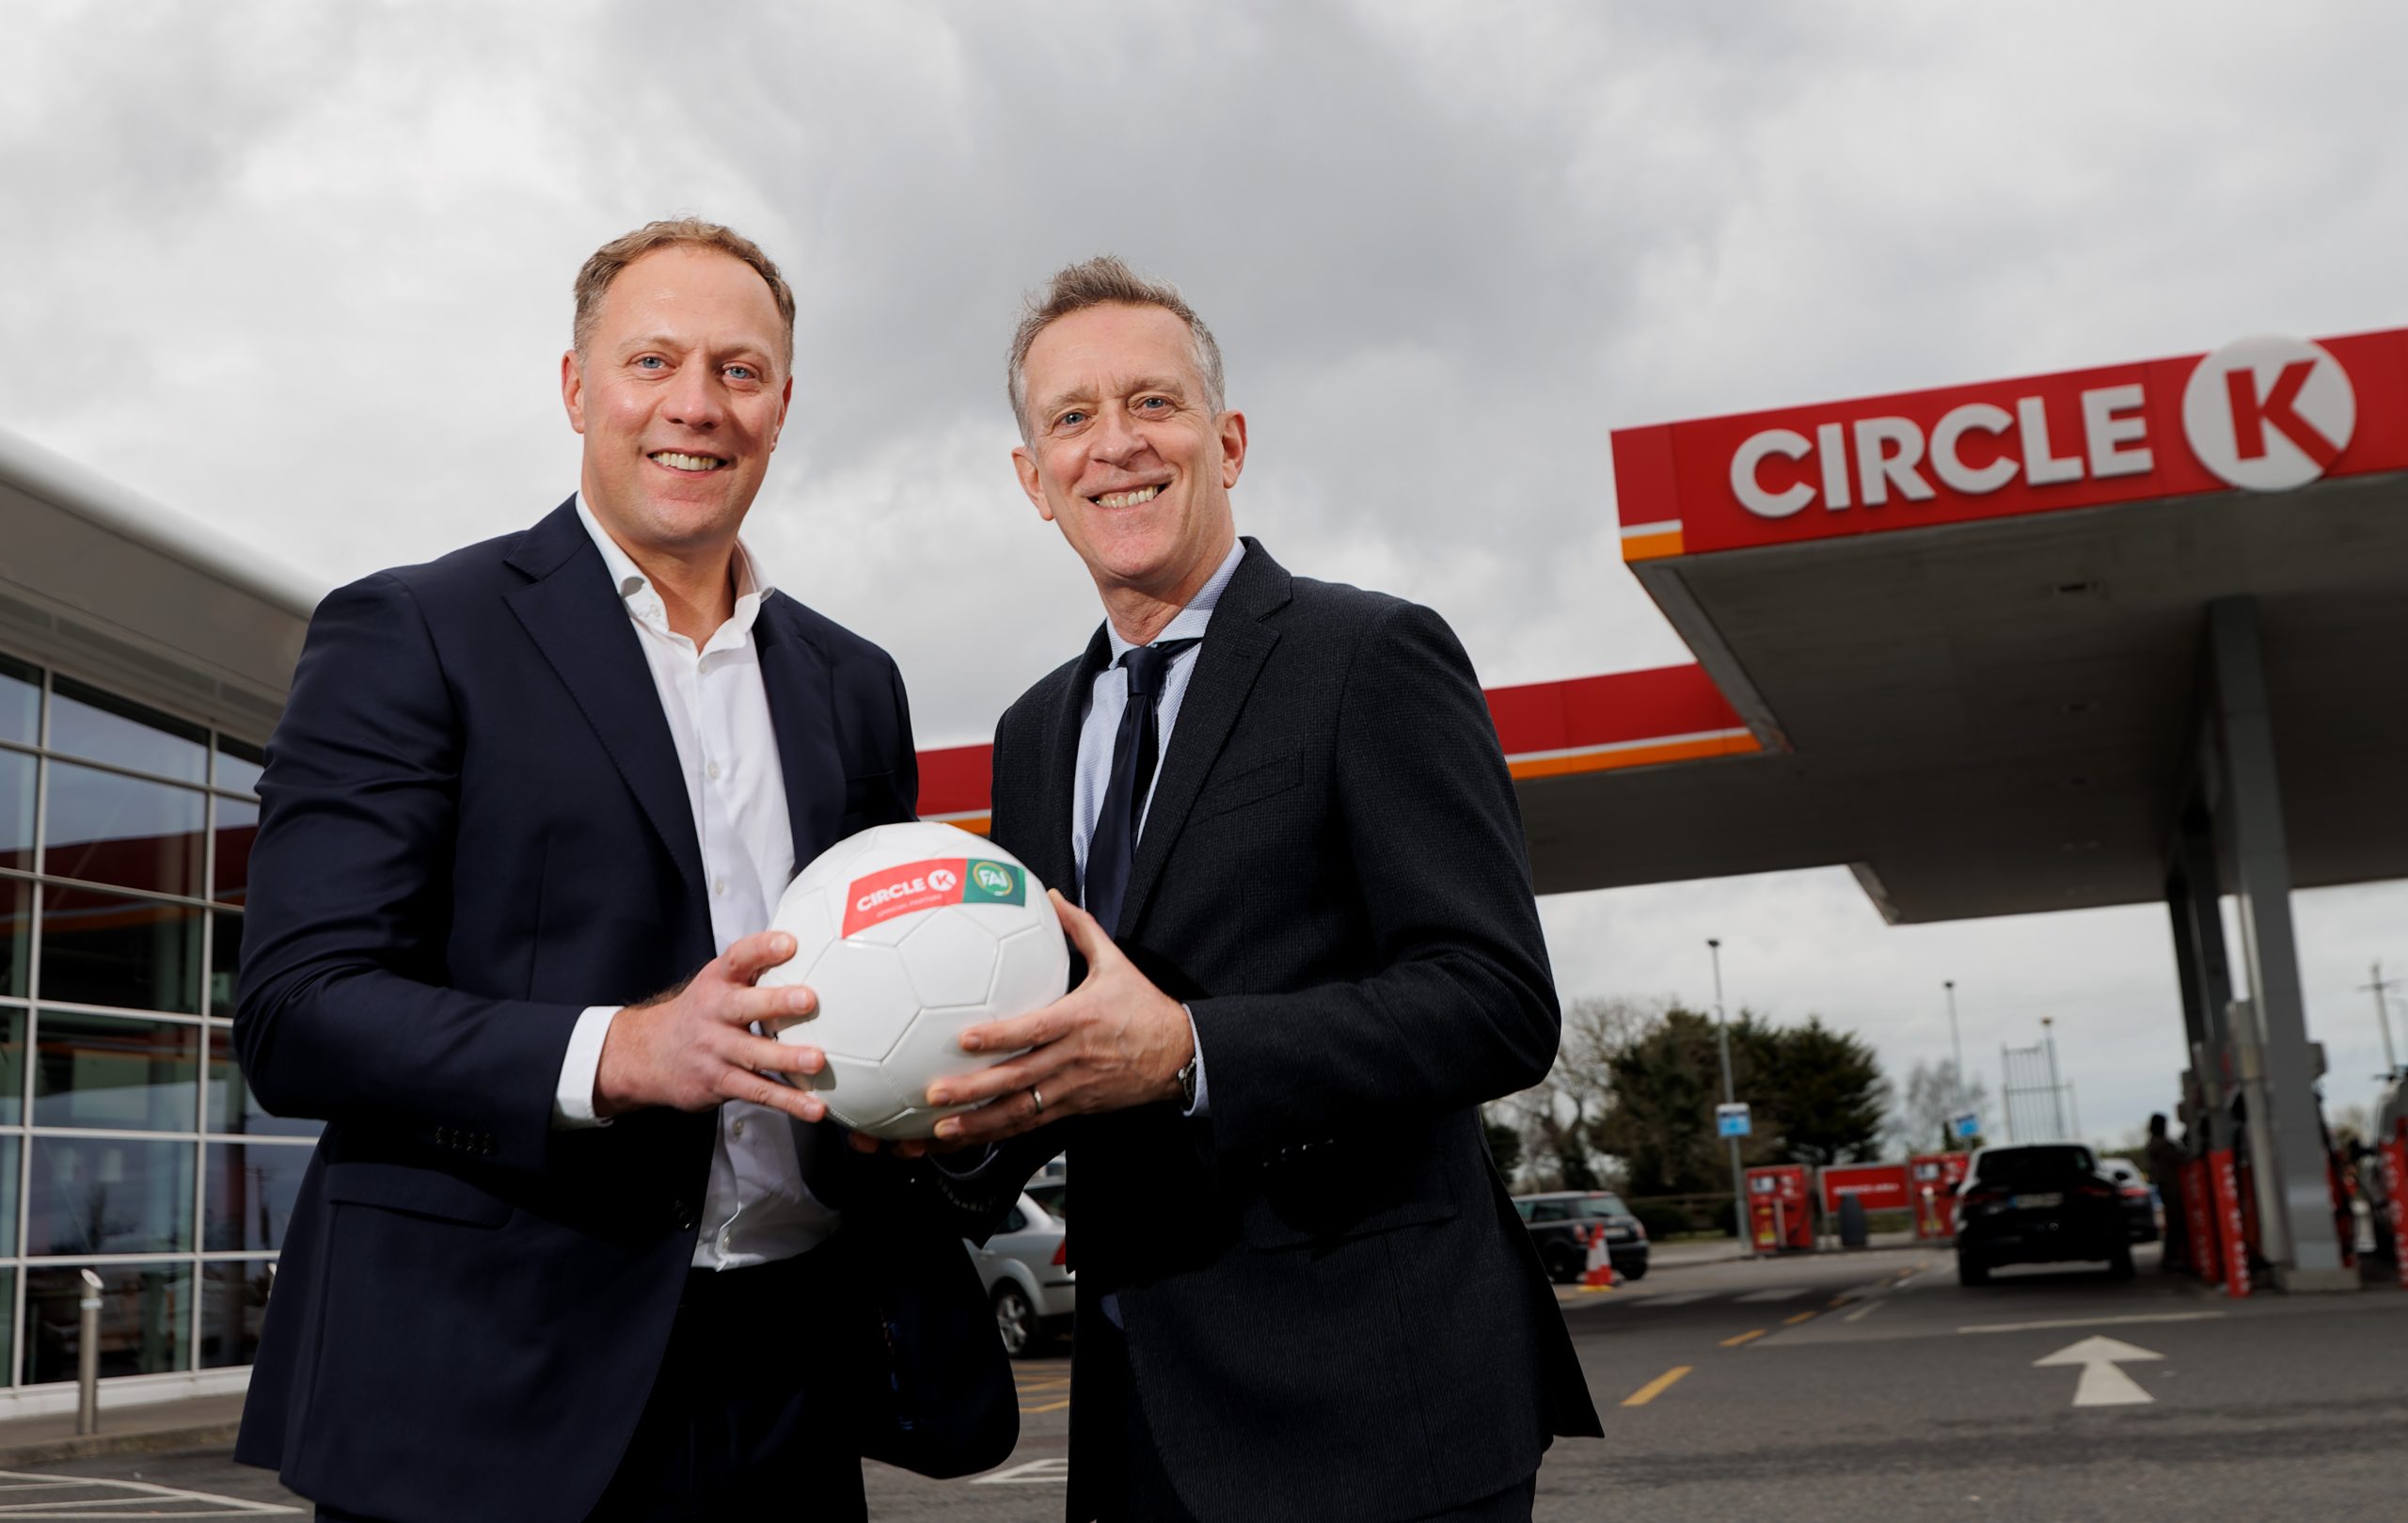 Circle K announces new partnership with the Football Association of Ireland (FAI)